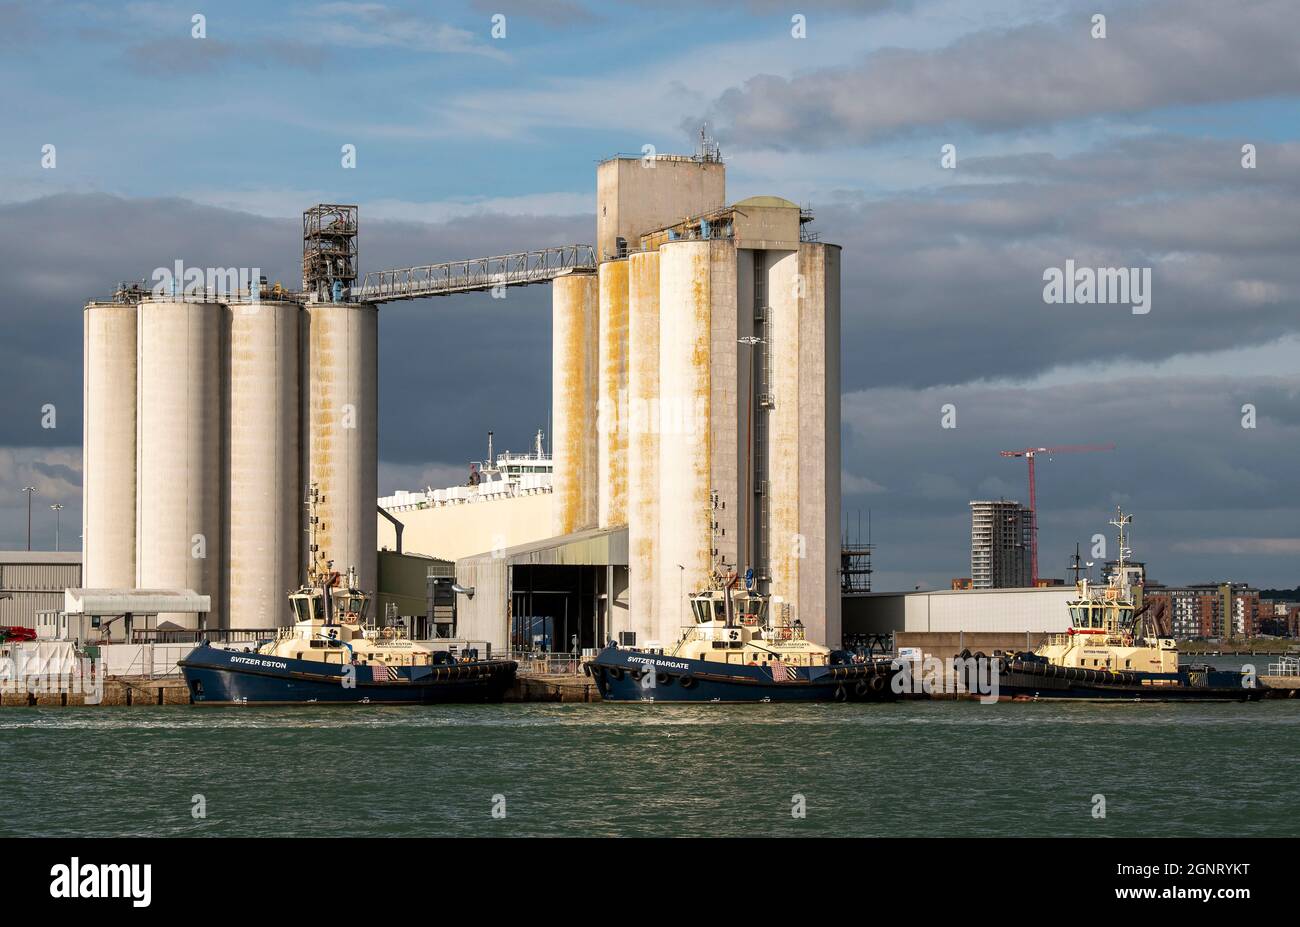 Southampton docks, England, UK. 2021. Grain silos and ocean going tugs in the port of Southampton, UK. Stock Photo